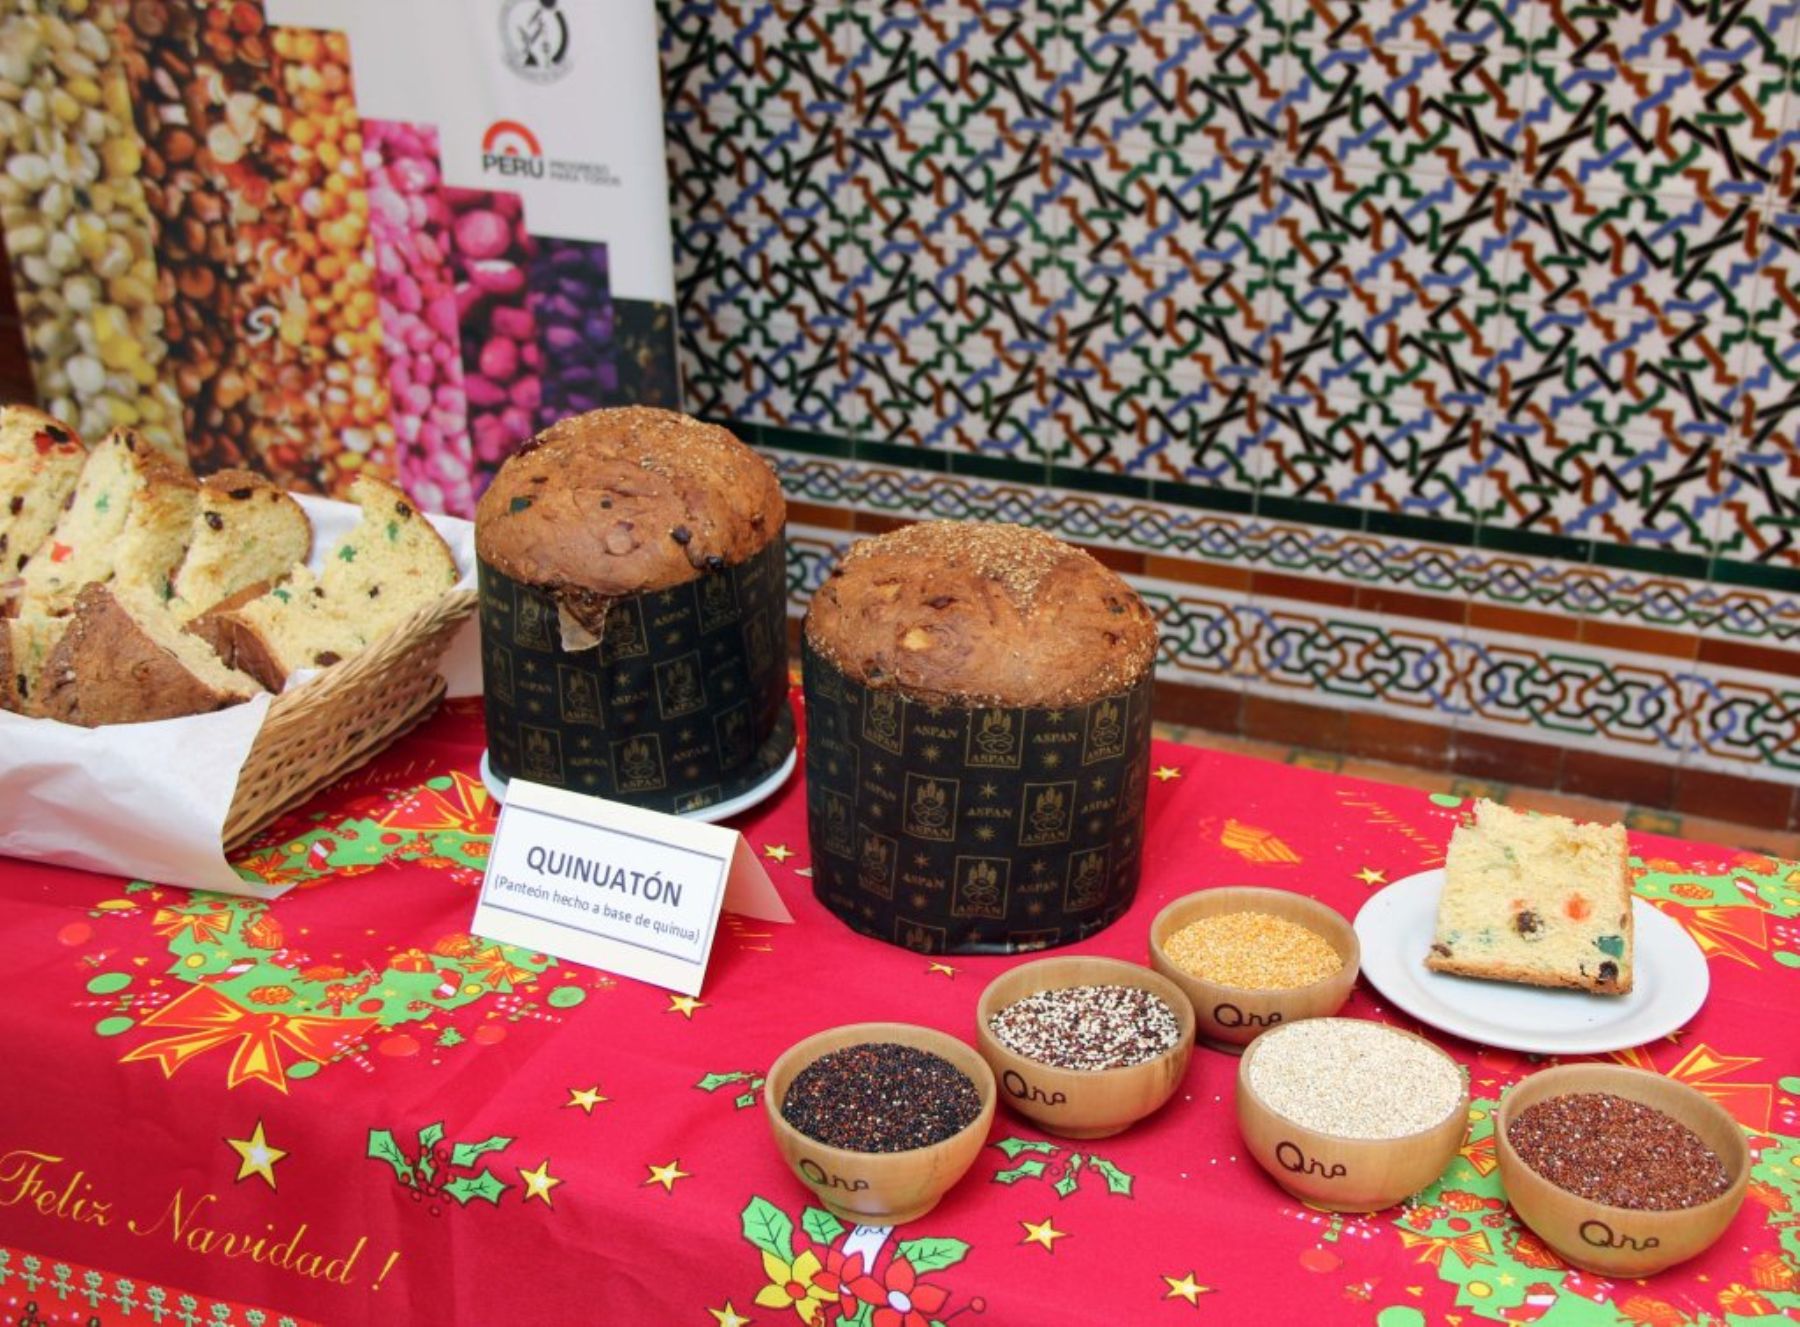 INS presenta quinuatón y chocoquinua como alternativa para cena navideña. Foto: Minsa